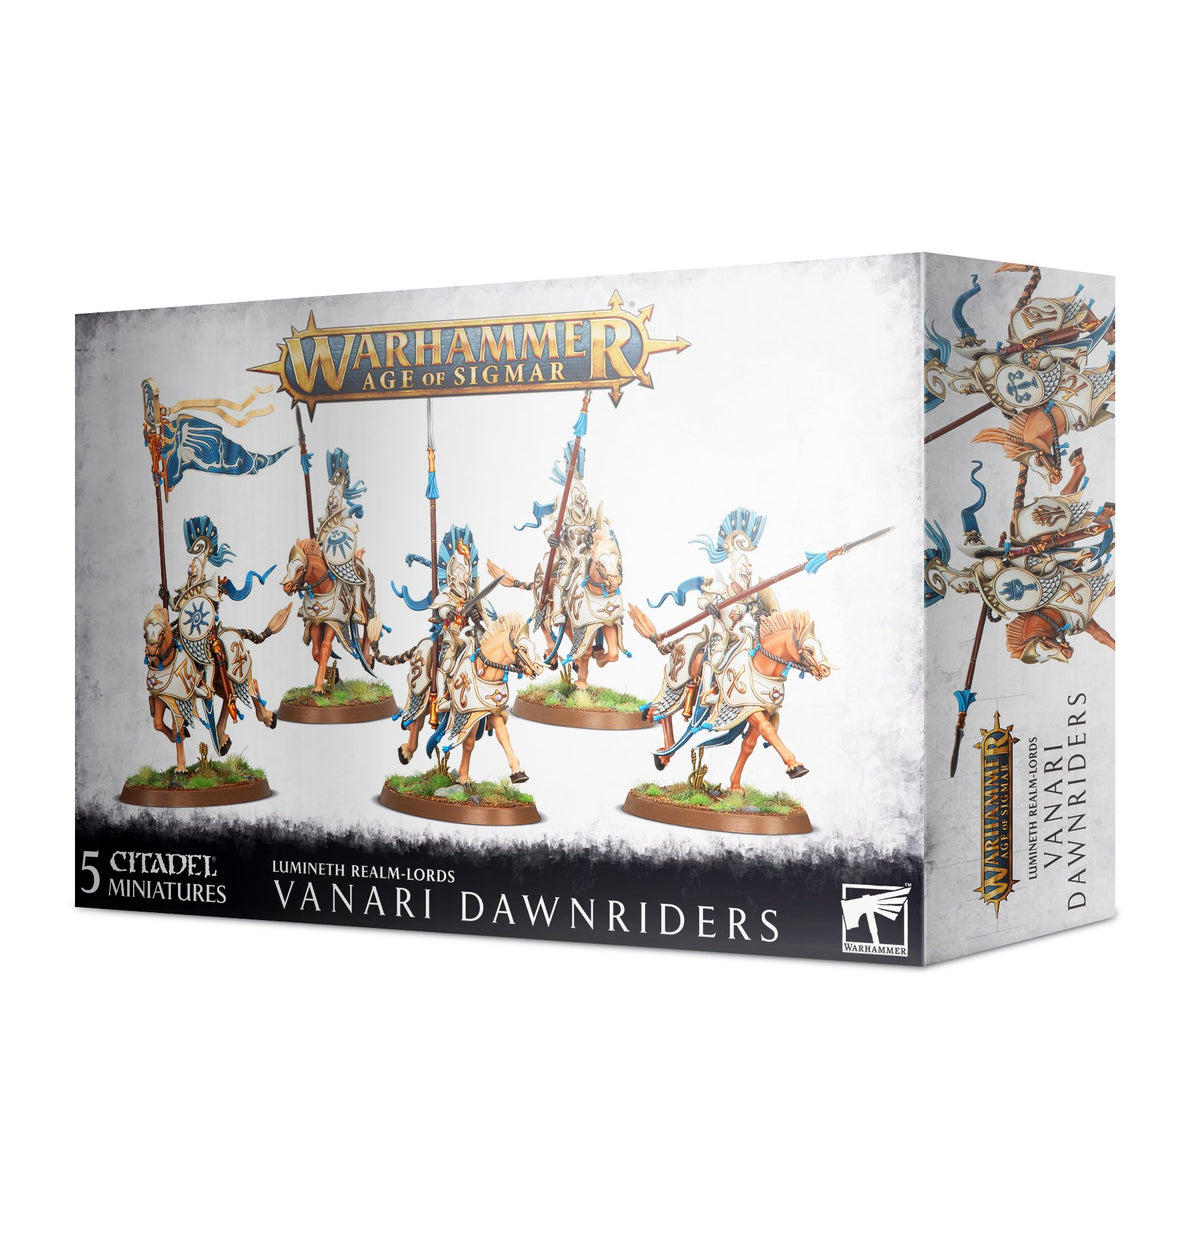 Lumineth Realm Lords - Vanari Dawnriders (87-60)